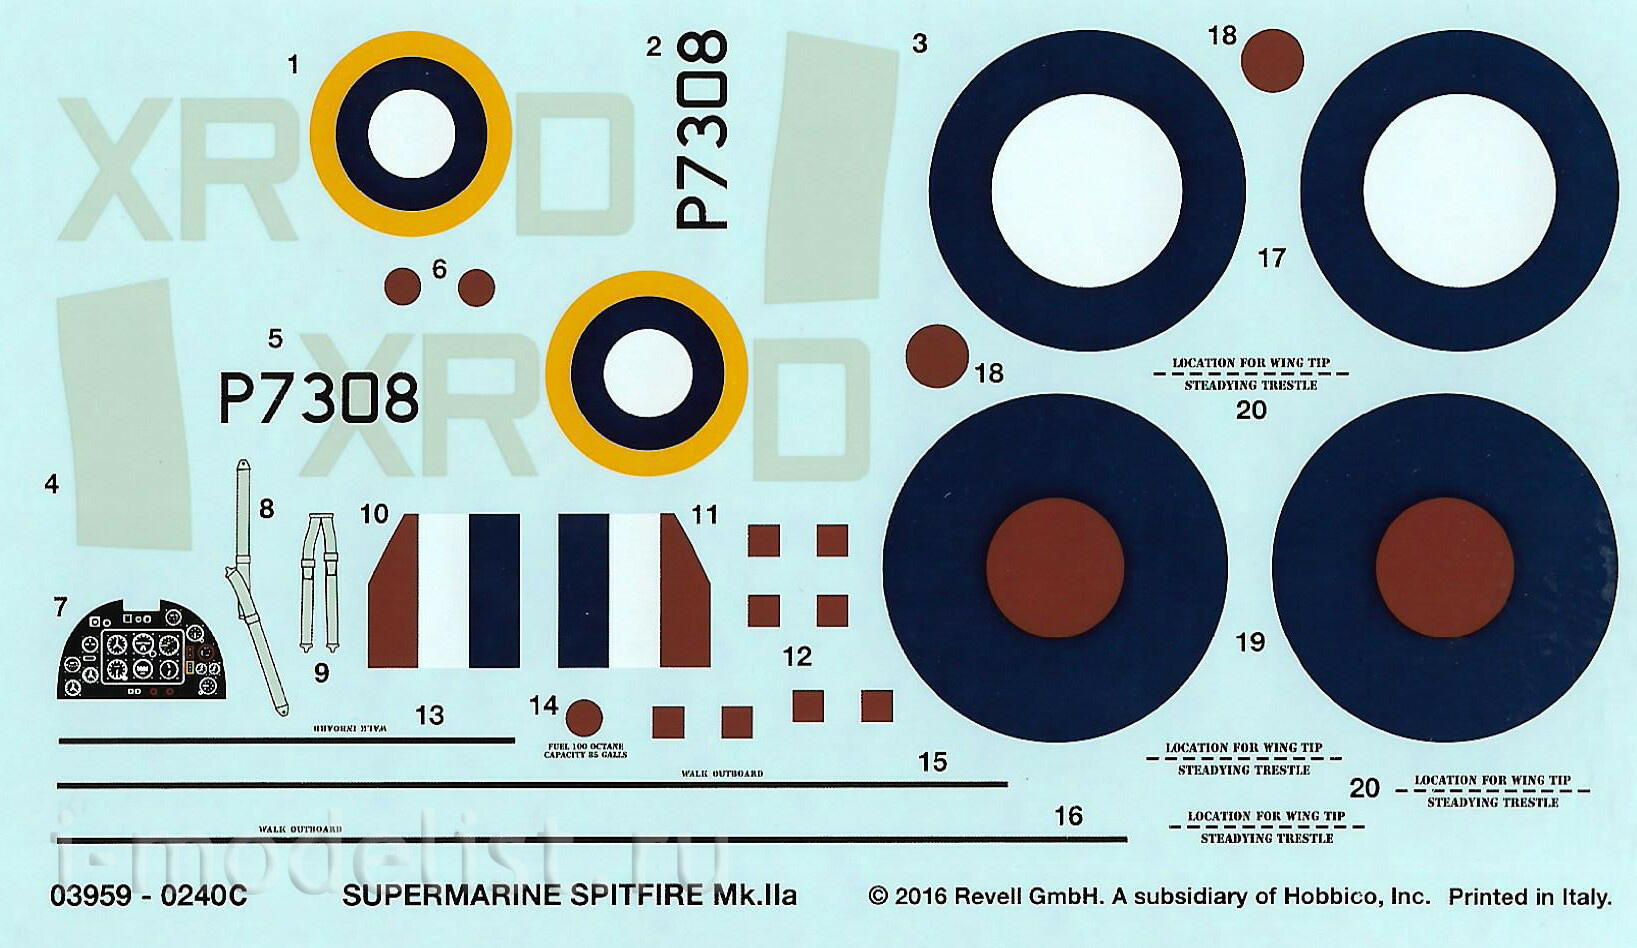 03959 Revell 1/48 Supermarine Spitfire Mk.II